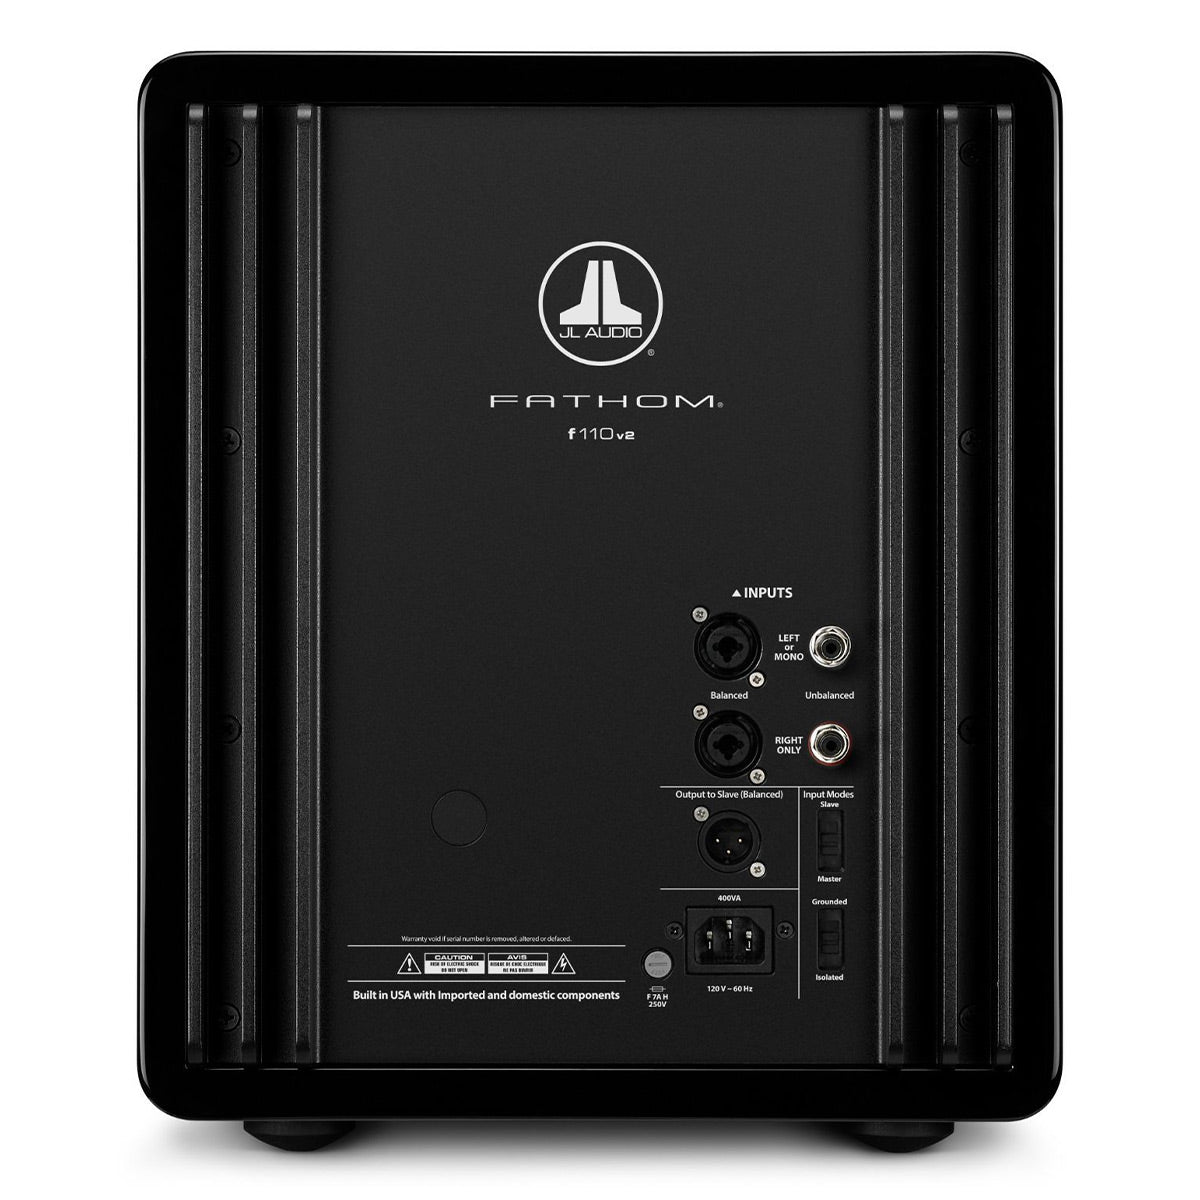 JL Audio Fathom f110v2 10" Powered Subwoofer (Black Gloss)